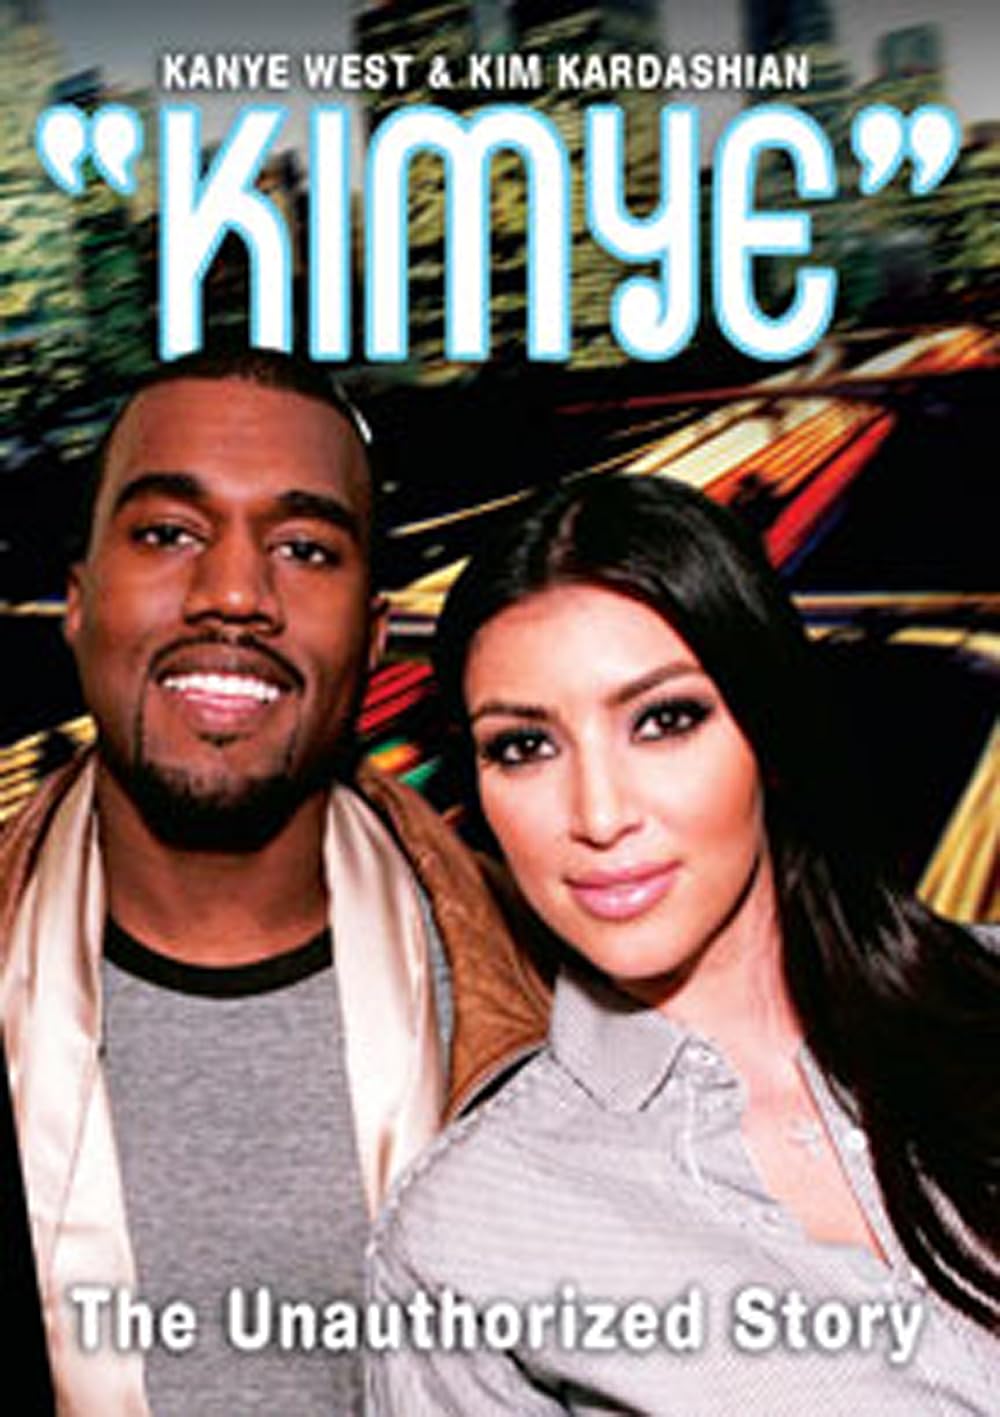 KIMYE - The True Life Story of Kanye West and Kim Kardashian